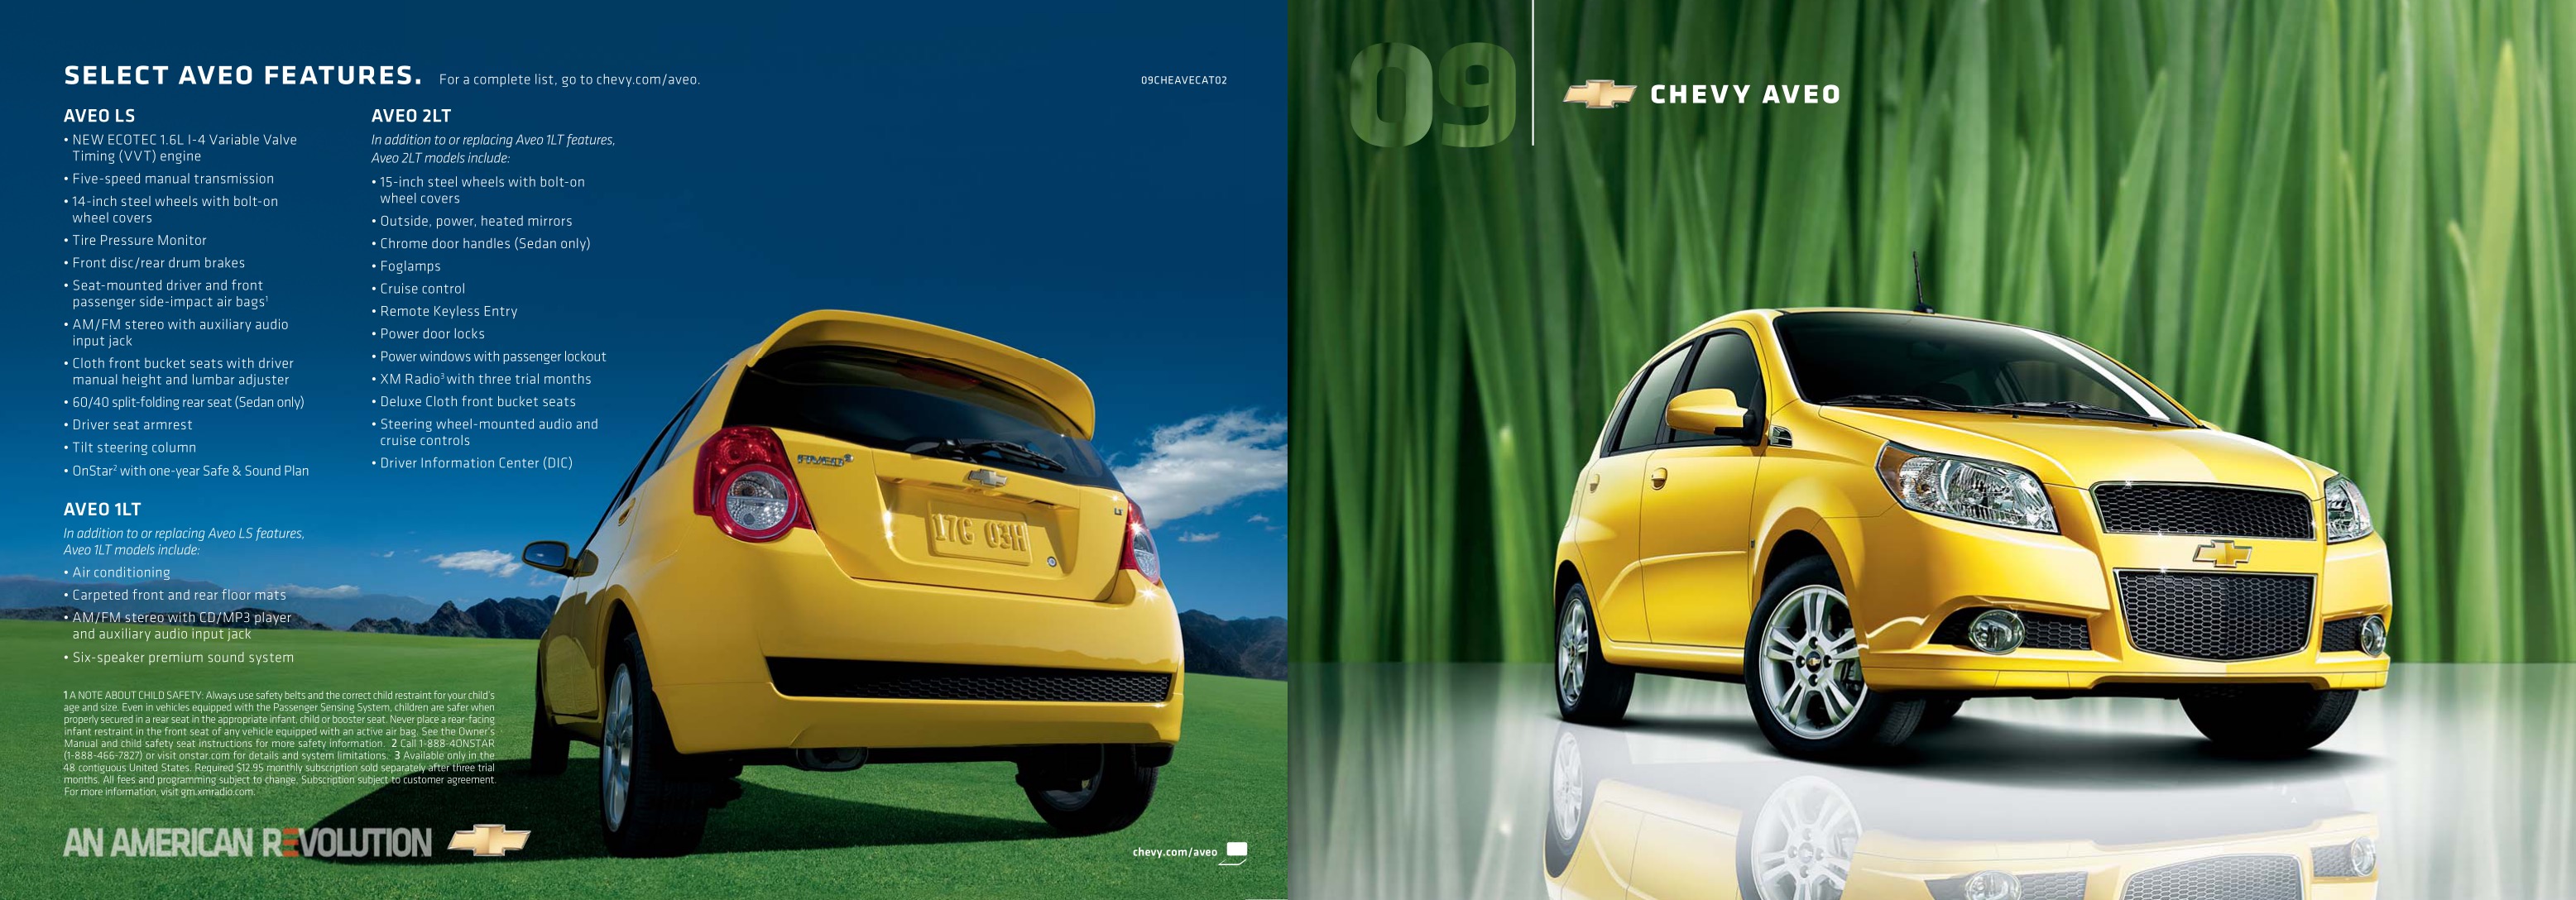 2009 Chevrolet Aveo Brochure